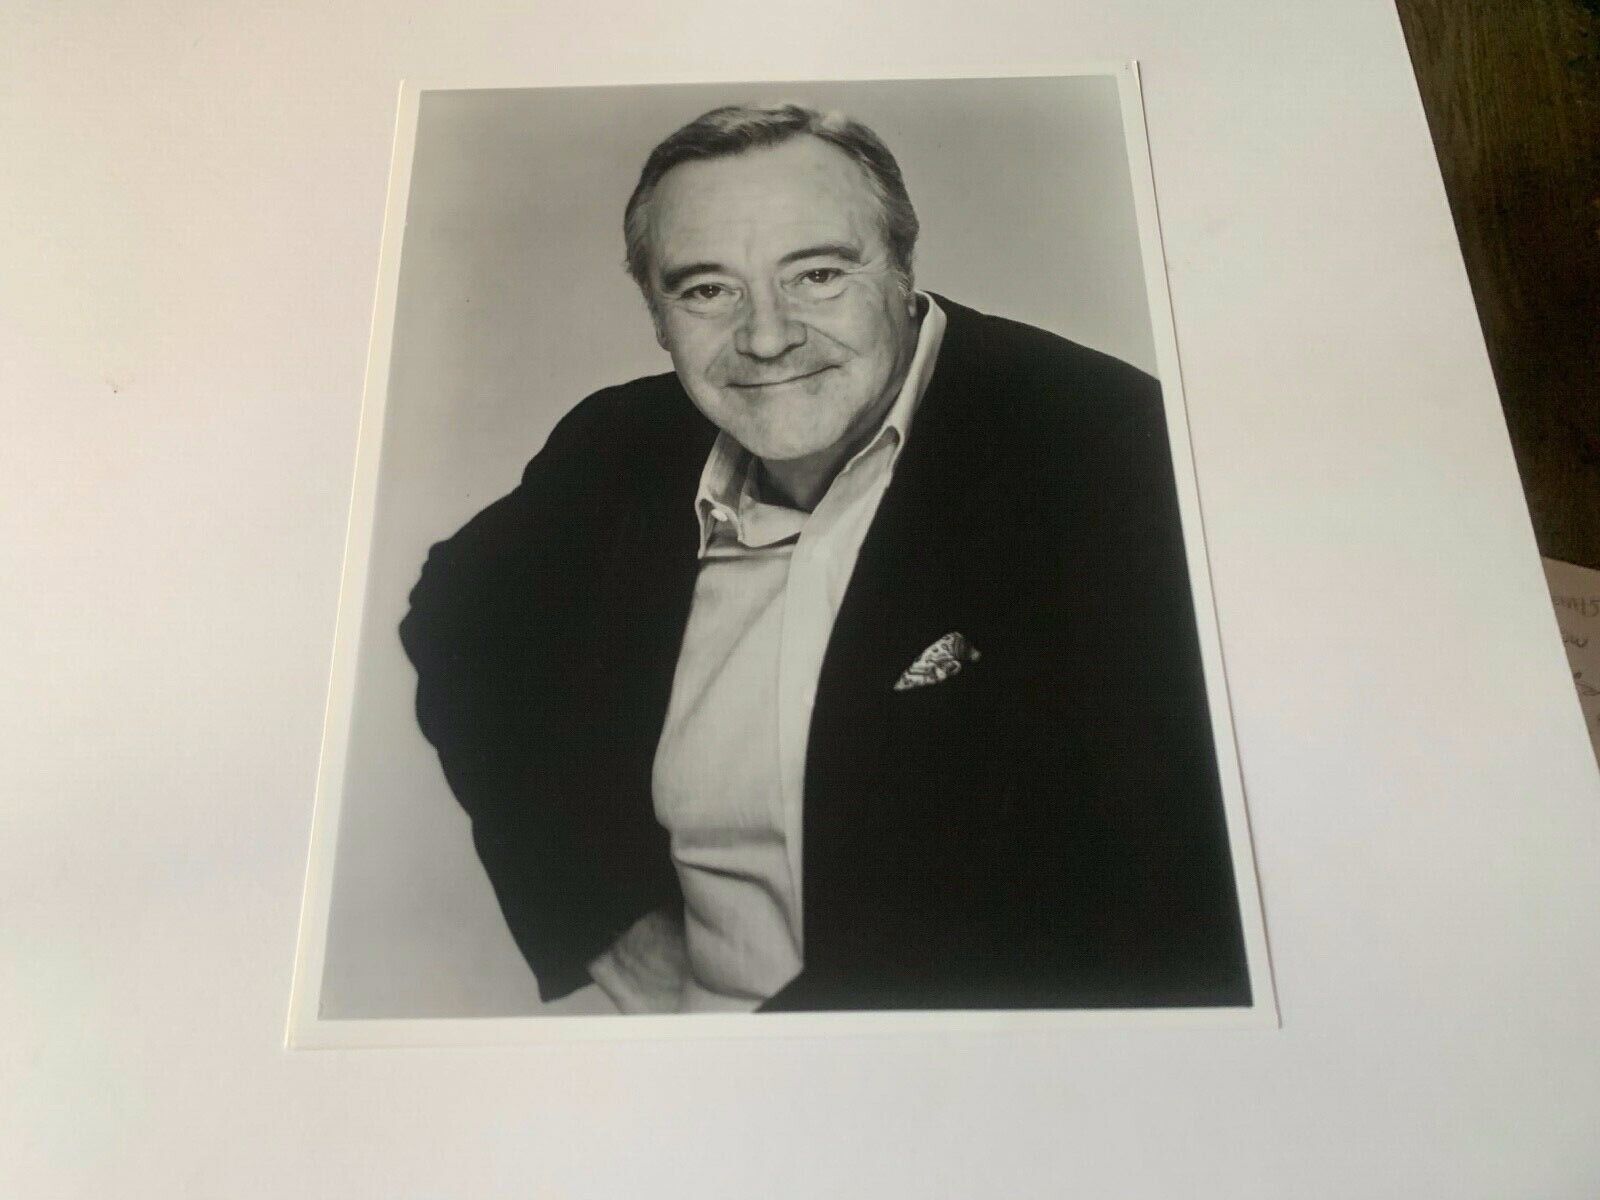 Jack Lemmon Unsigned Vintage Publicity Photo Size 8x10 B&W Celebrity Photo